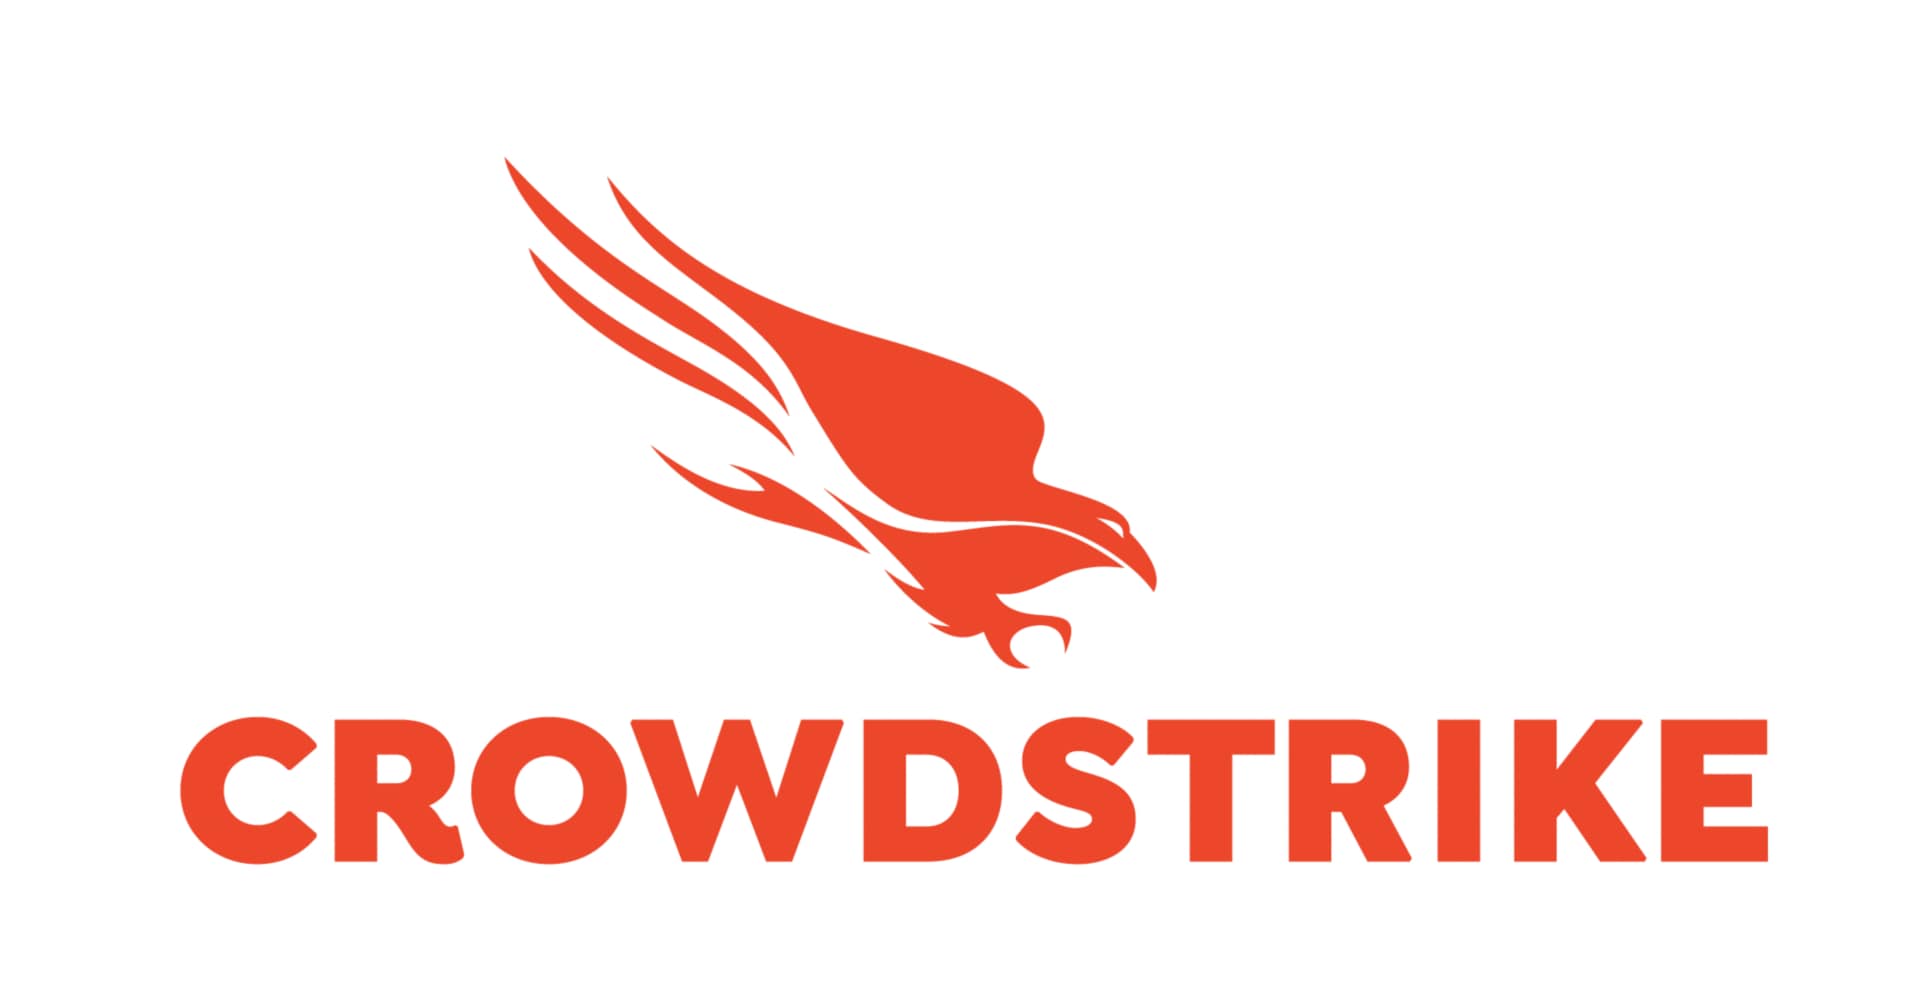 CrowdStrike 12-Month Strategic Assessments - T&M Custom SOW